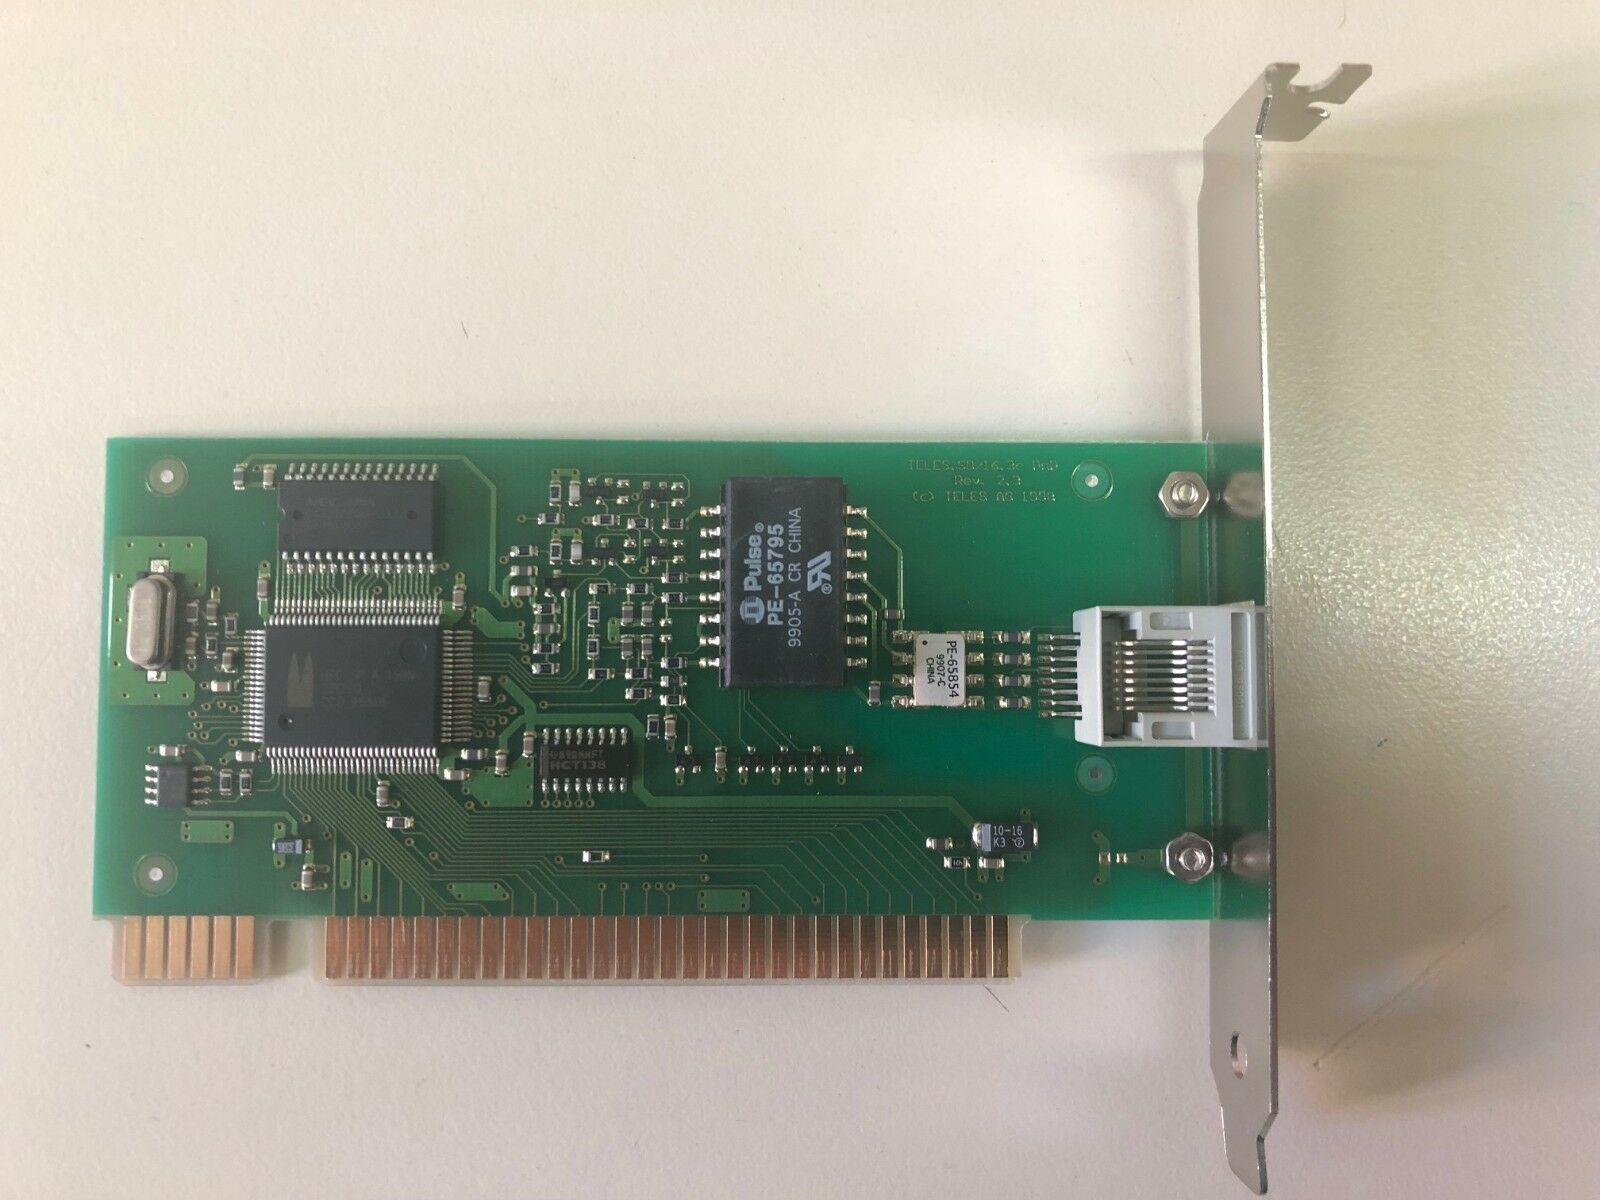 Teles S0/16.3c PCI internal card ISDN Modem Fax Card Adapter